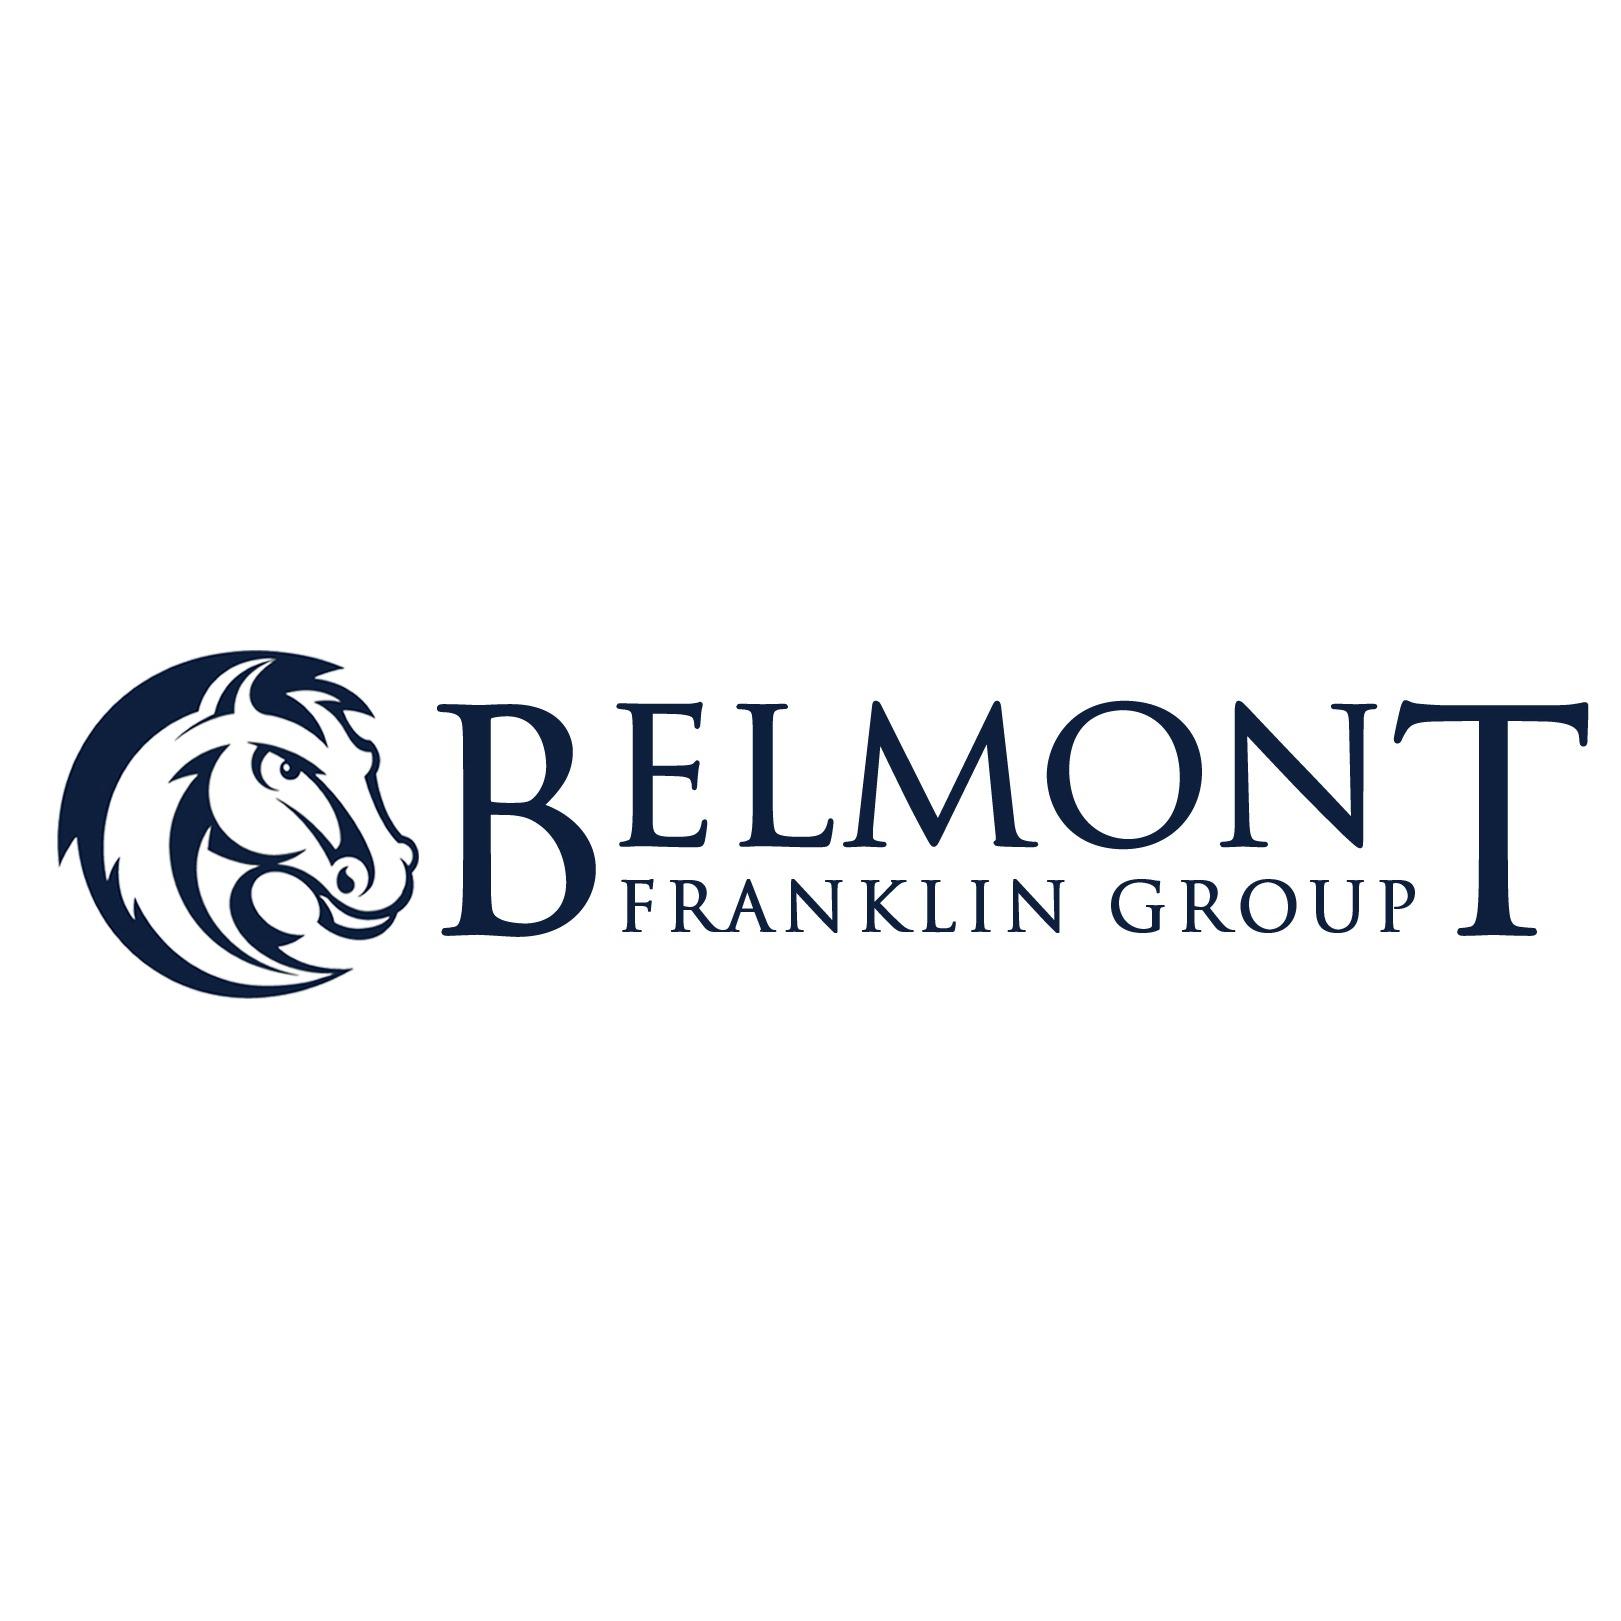 THE BELMONT FRANKLIN GROUP Logo